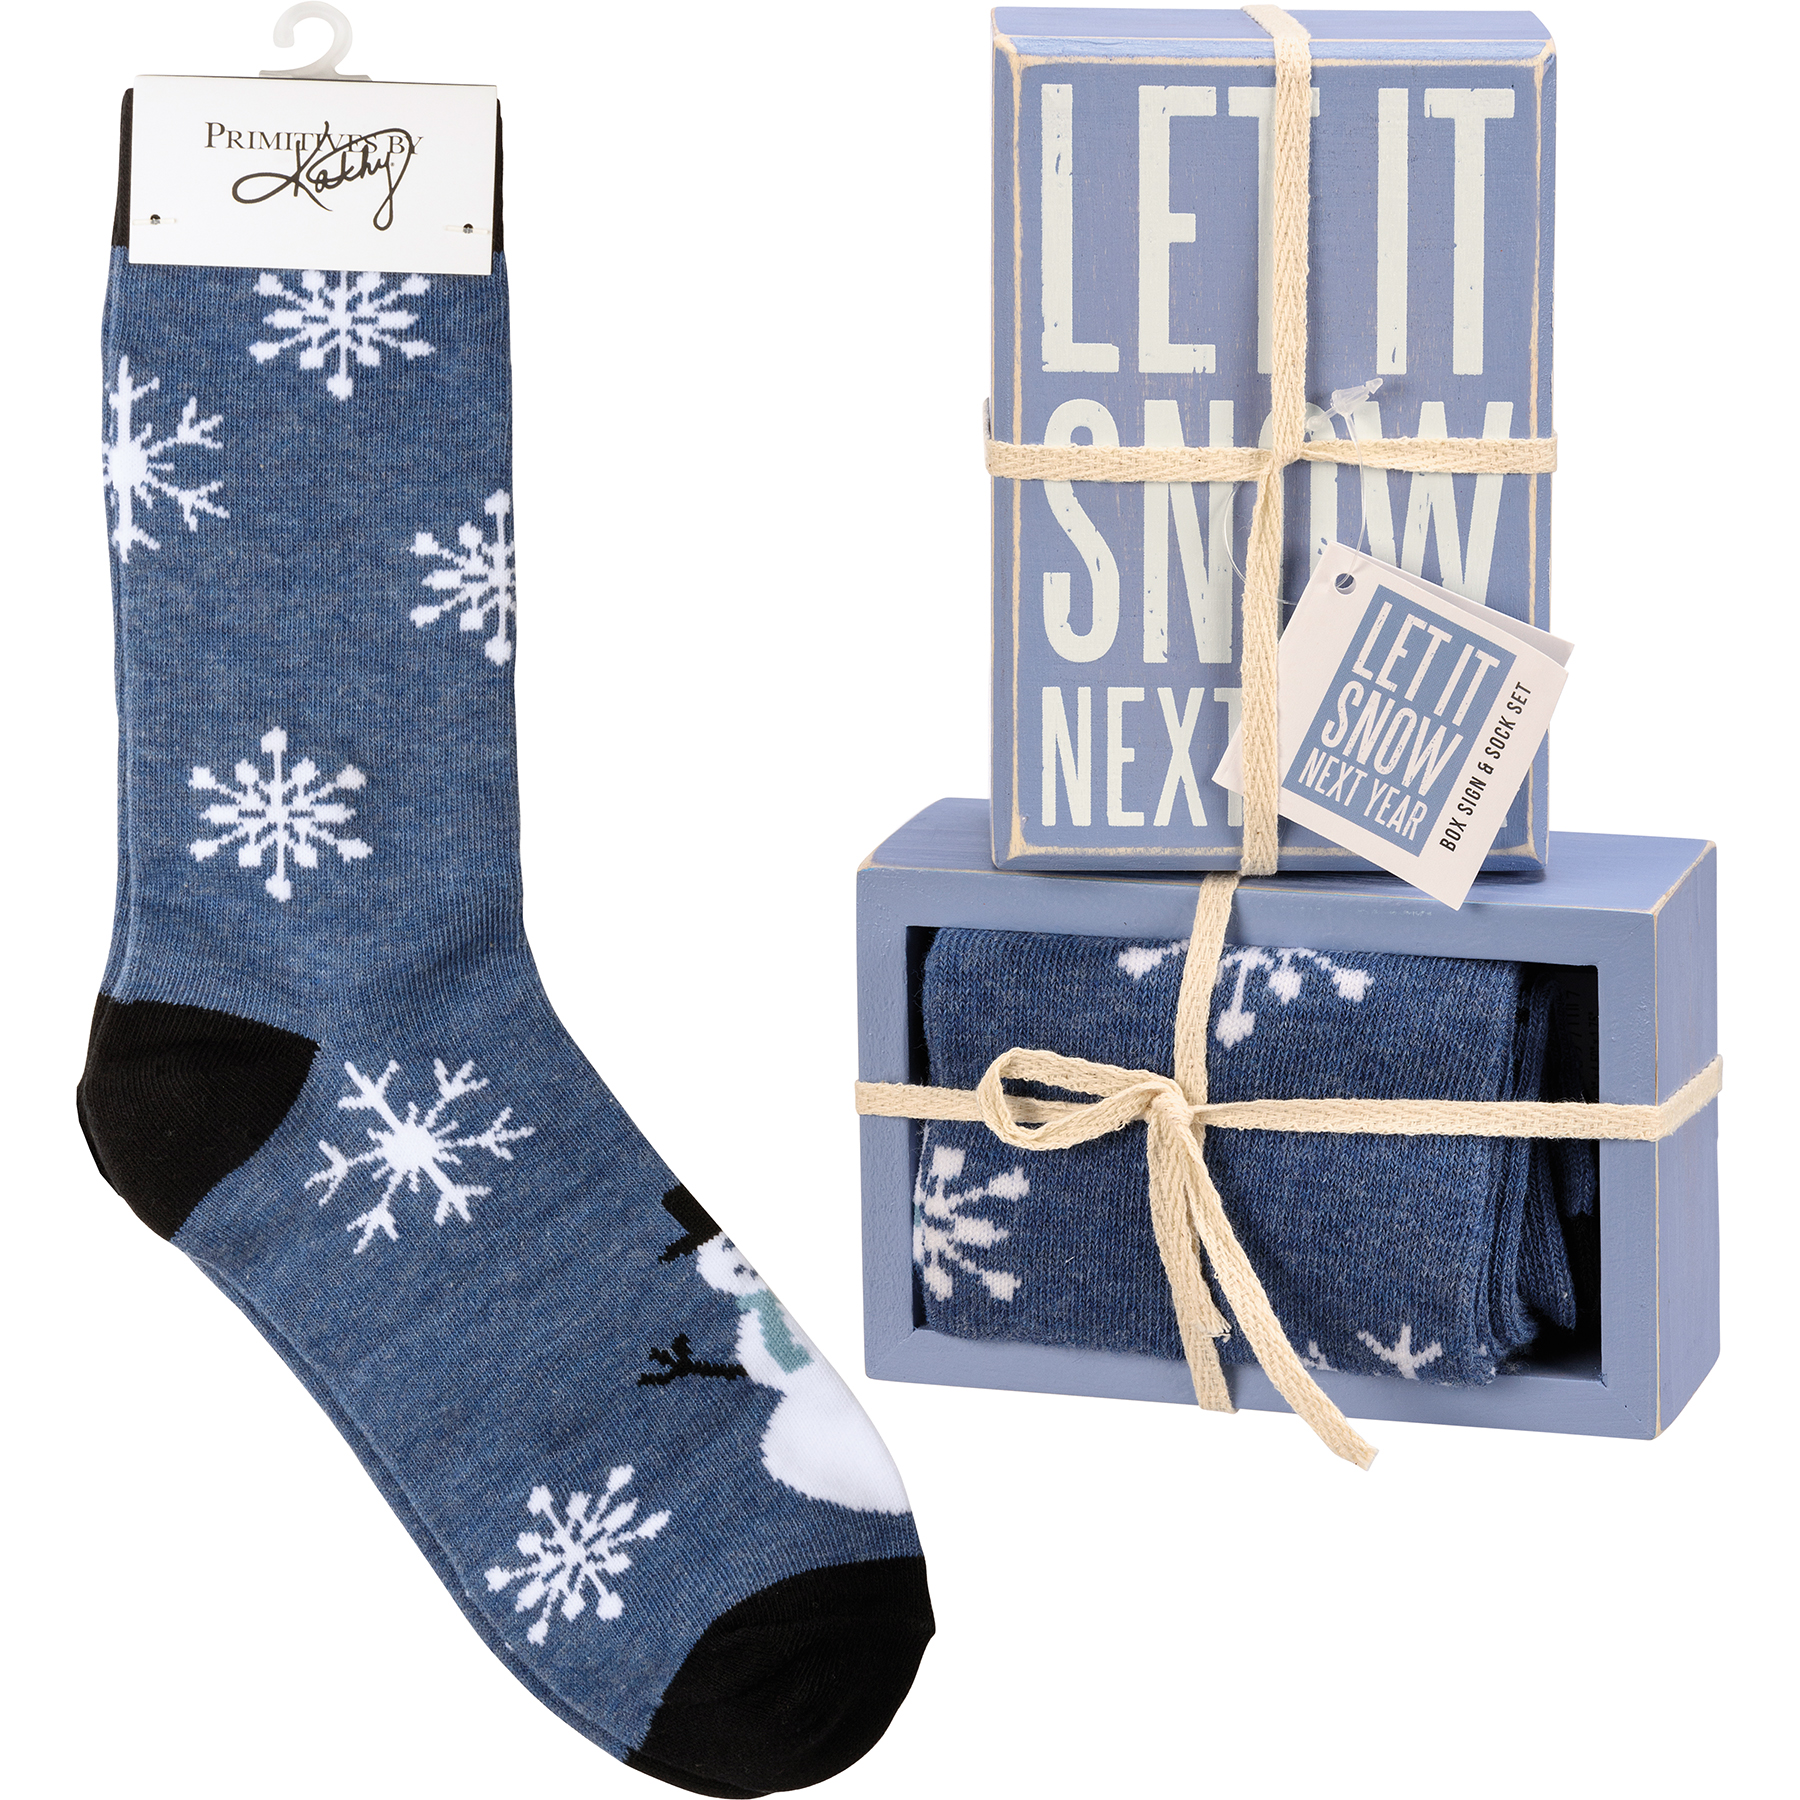 Let It Snow Next Year Box Sign & Sock Set | Primitives By Kathy